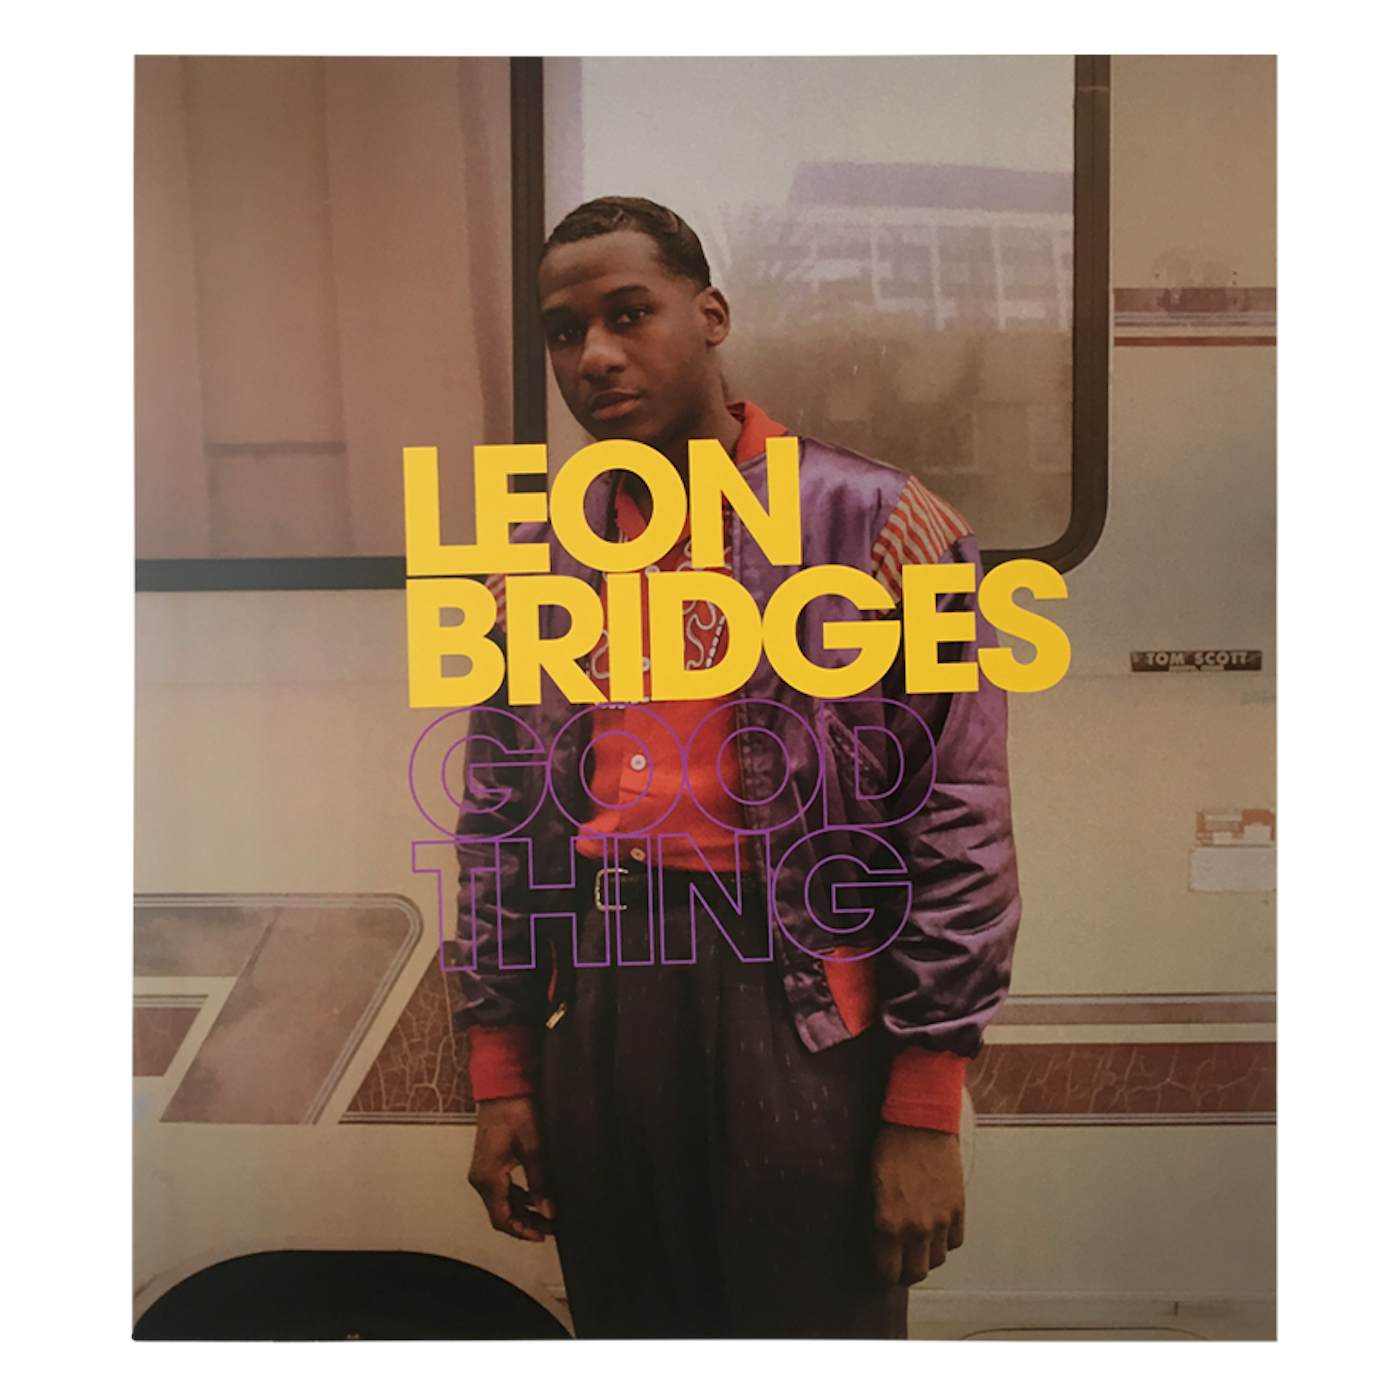 Leon Bridges Good Thing Poster